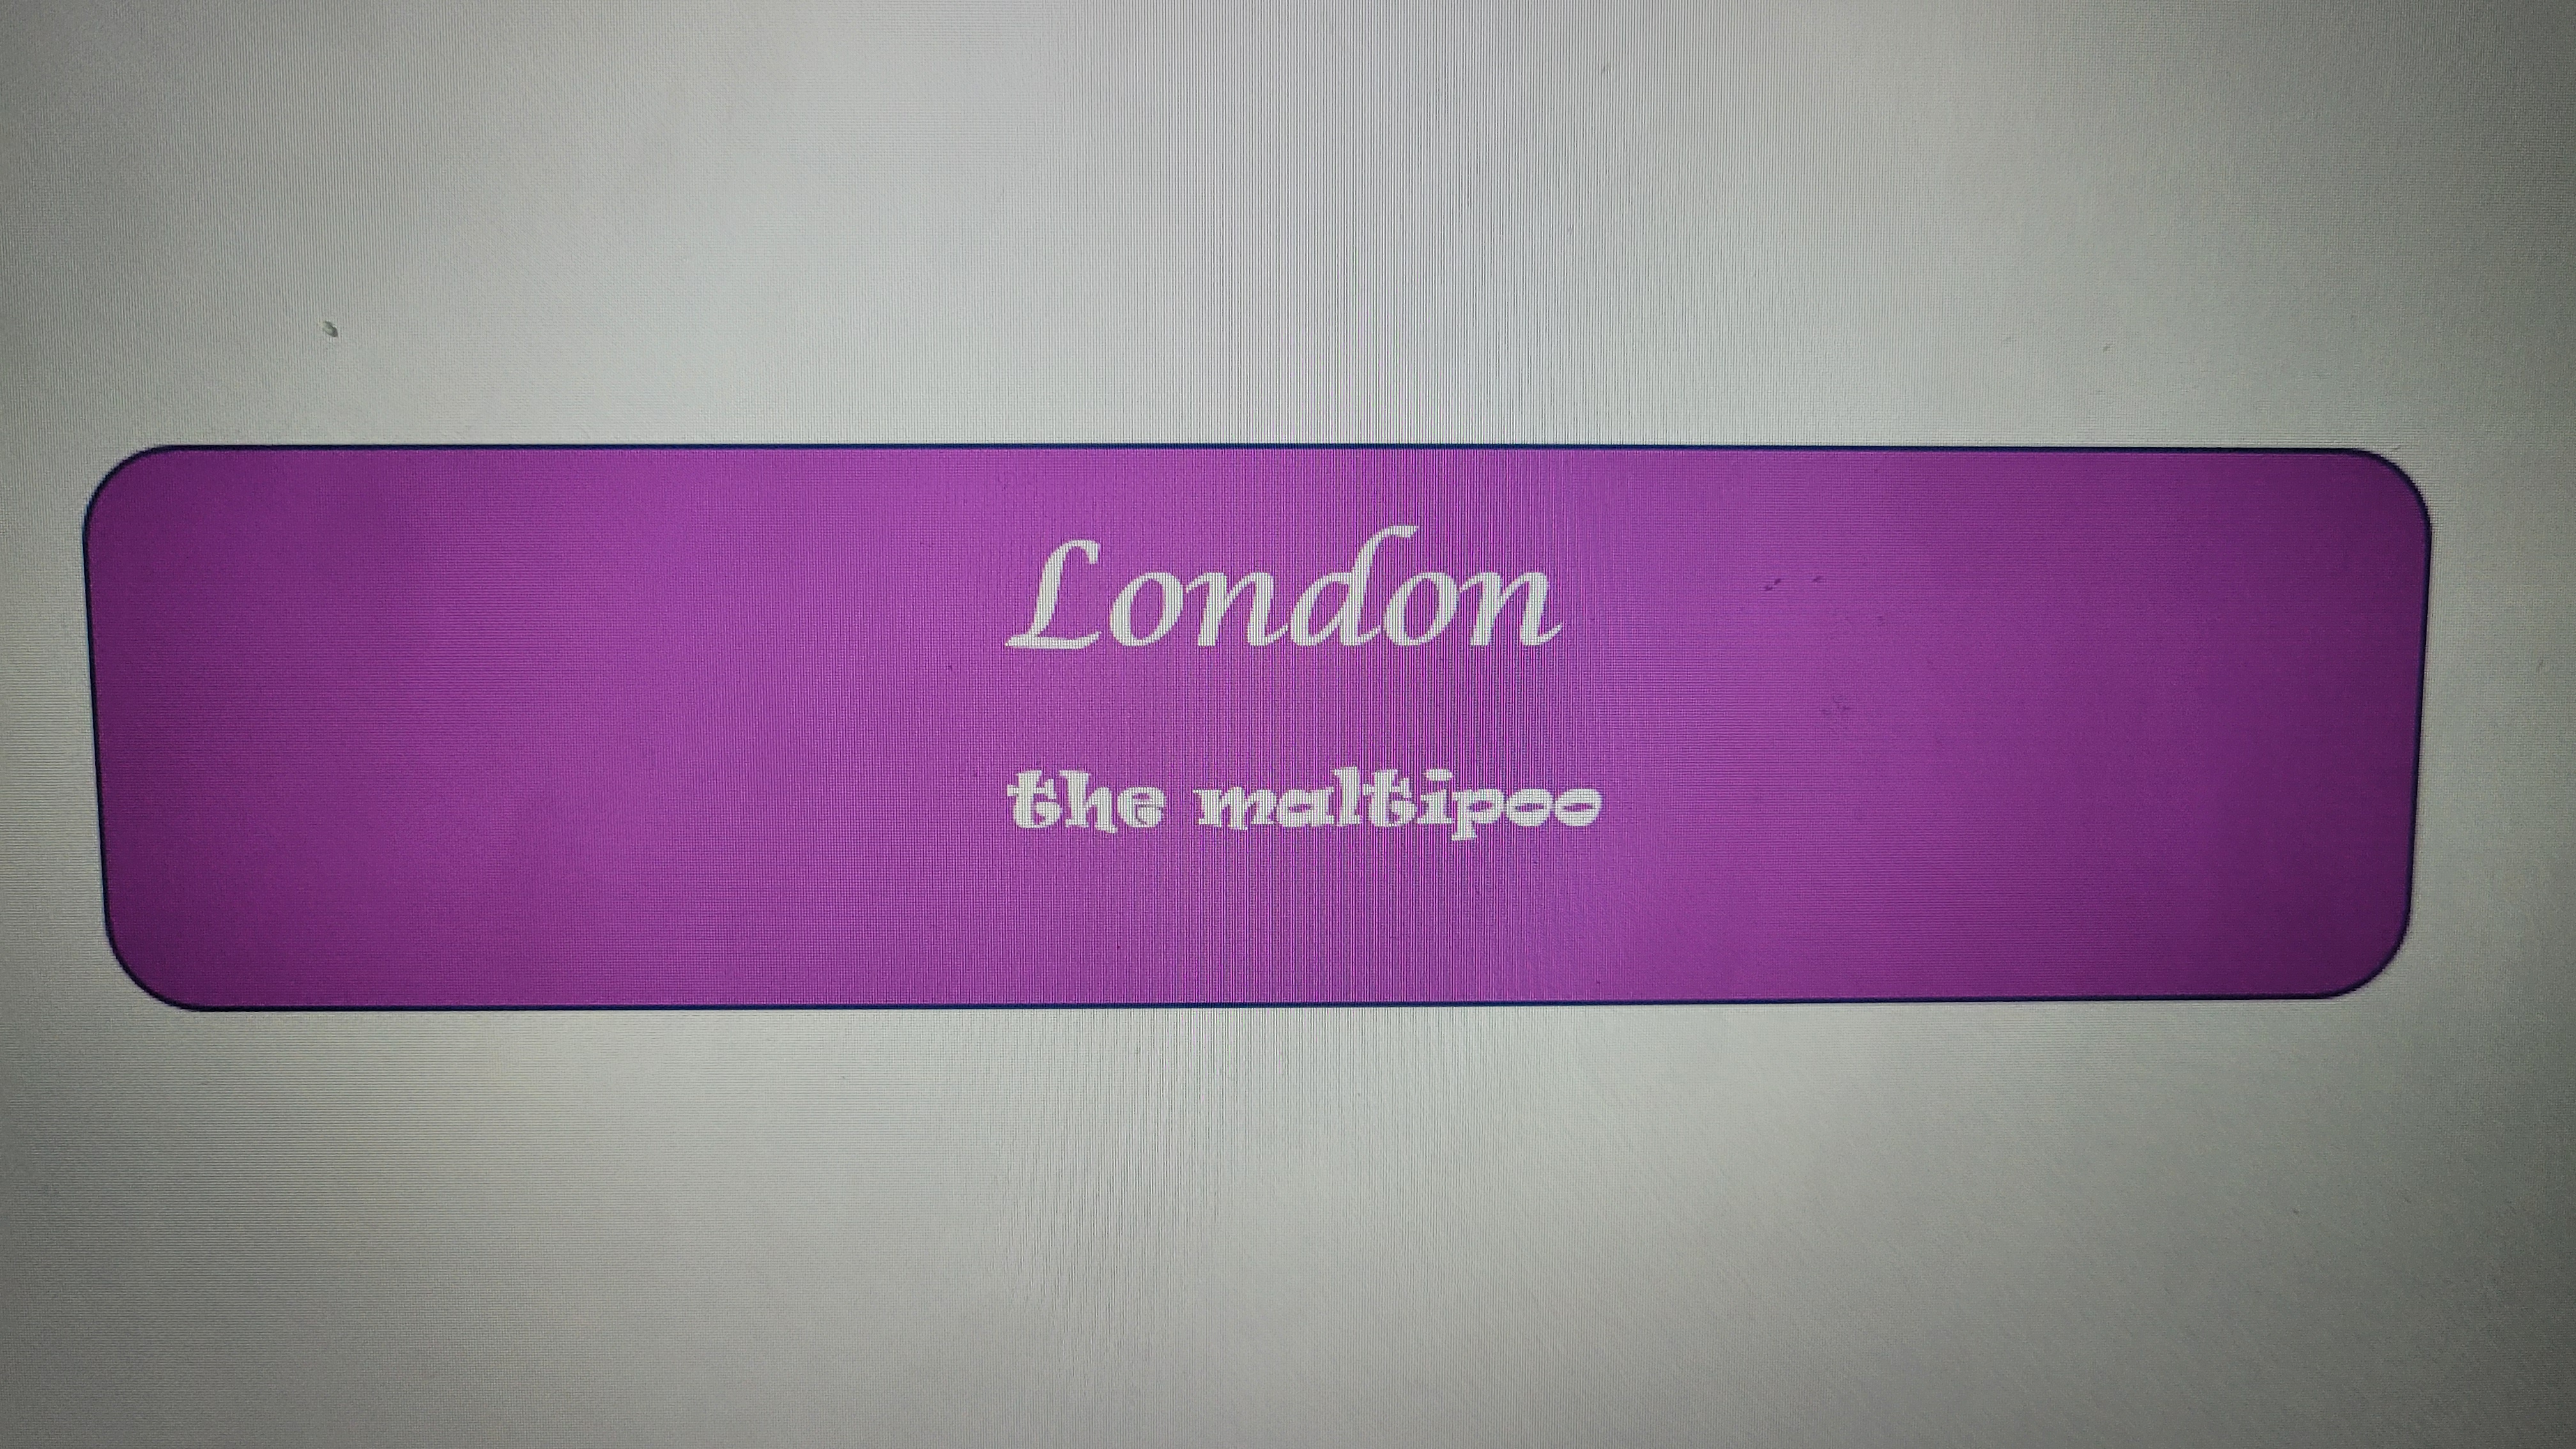 London_The_Maltipoo banner